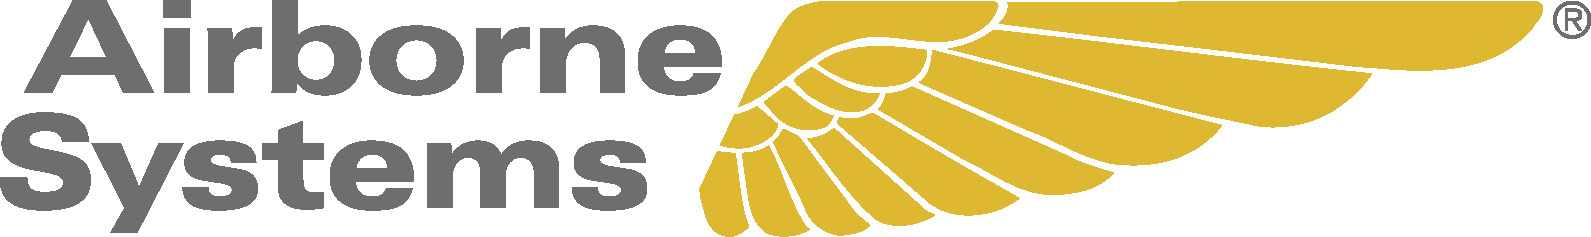 Airborne Systems Logo